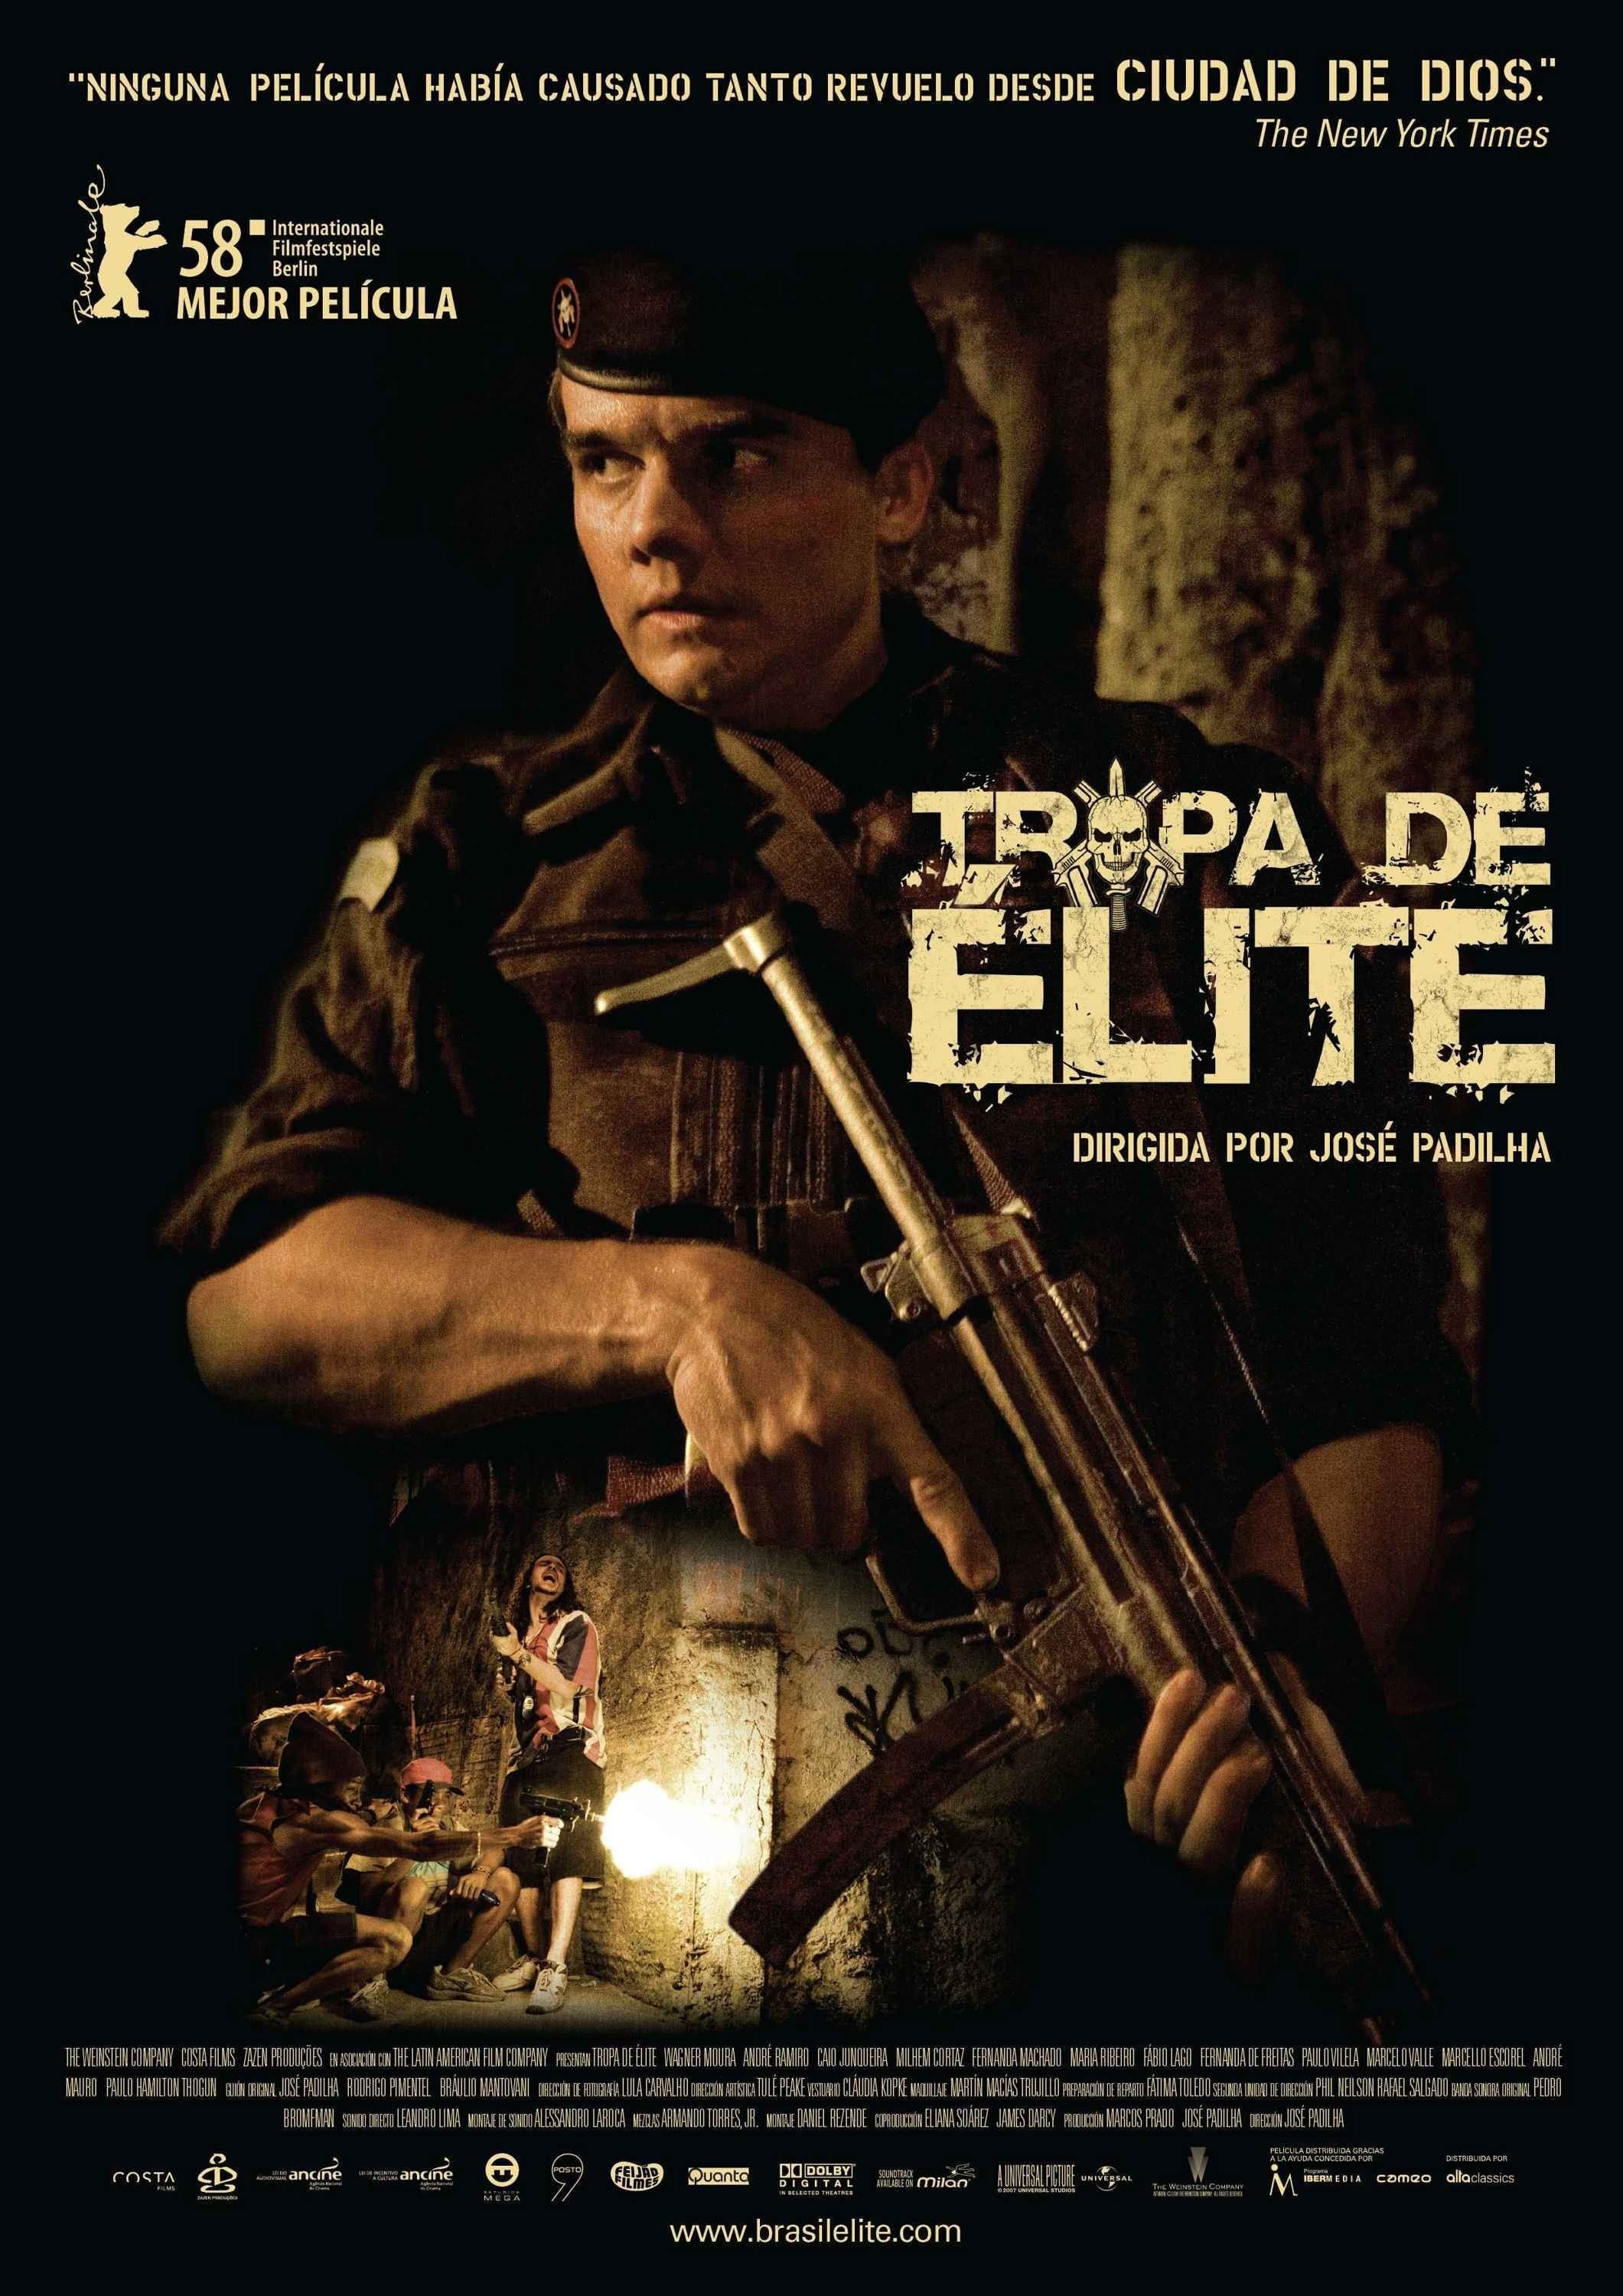 Wagner Moura in Elite Squad (2007)